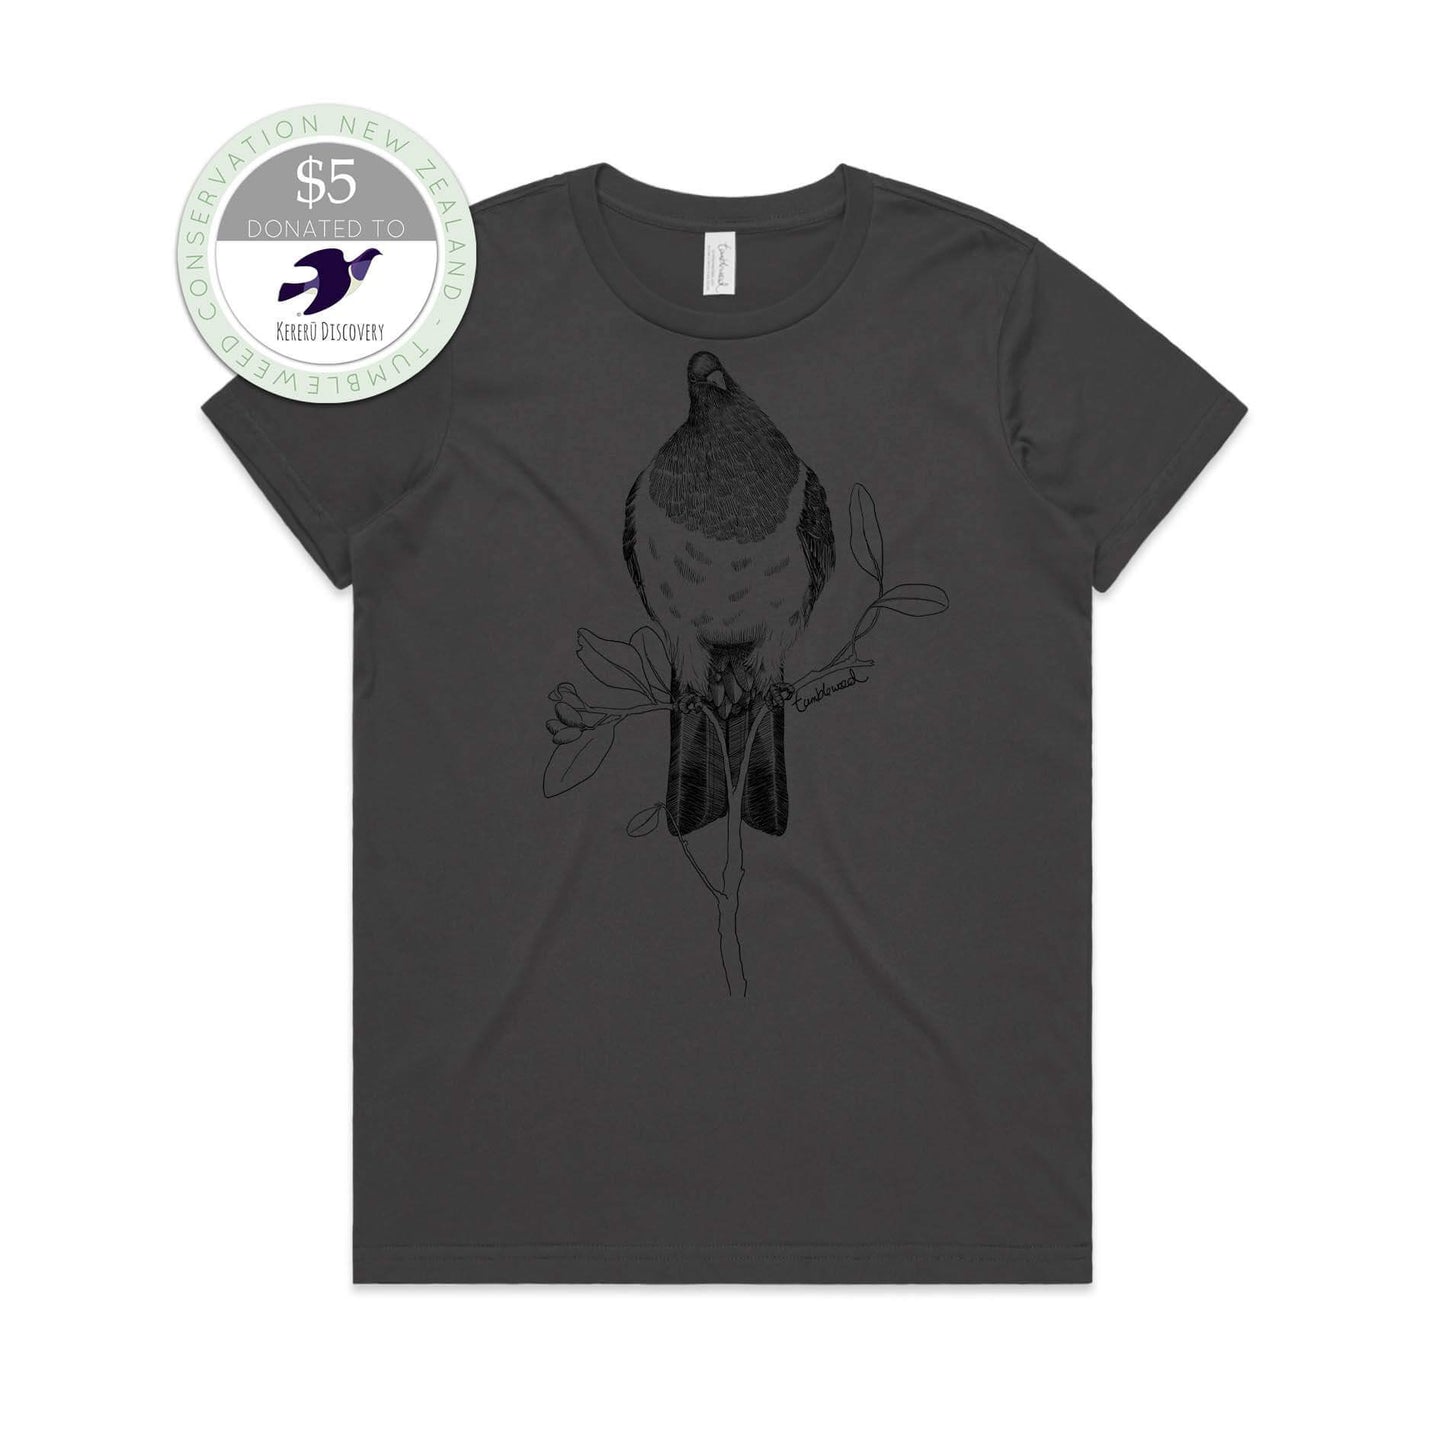 Charcoal, female t-shirt featuring a screen printed kereru design.